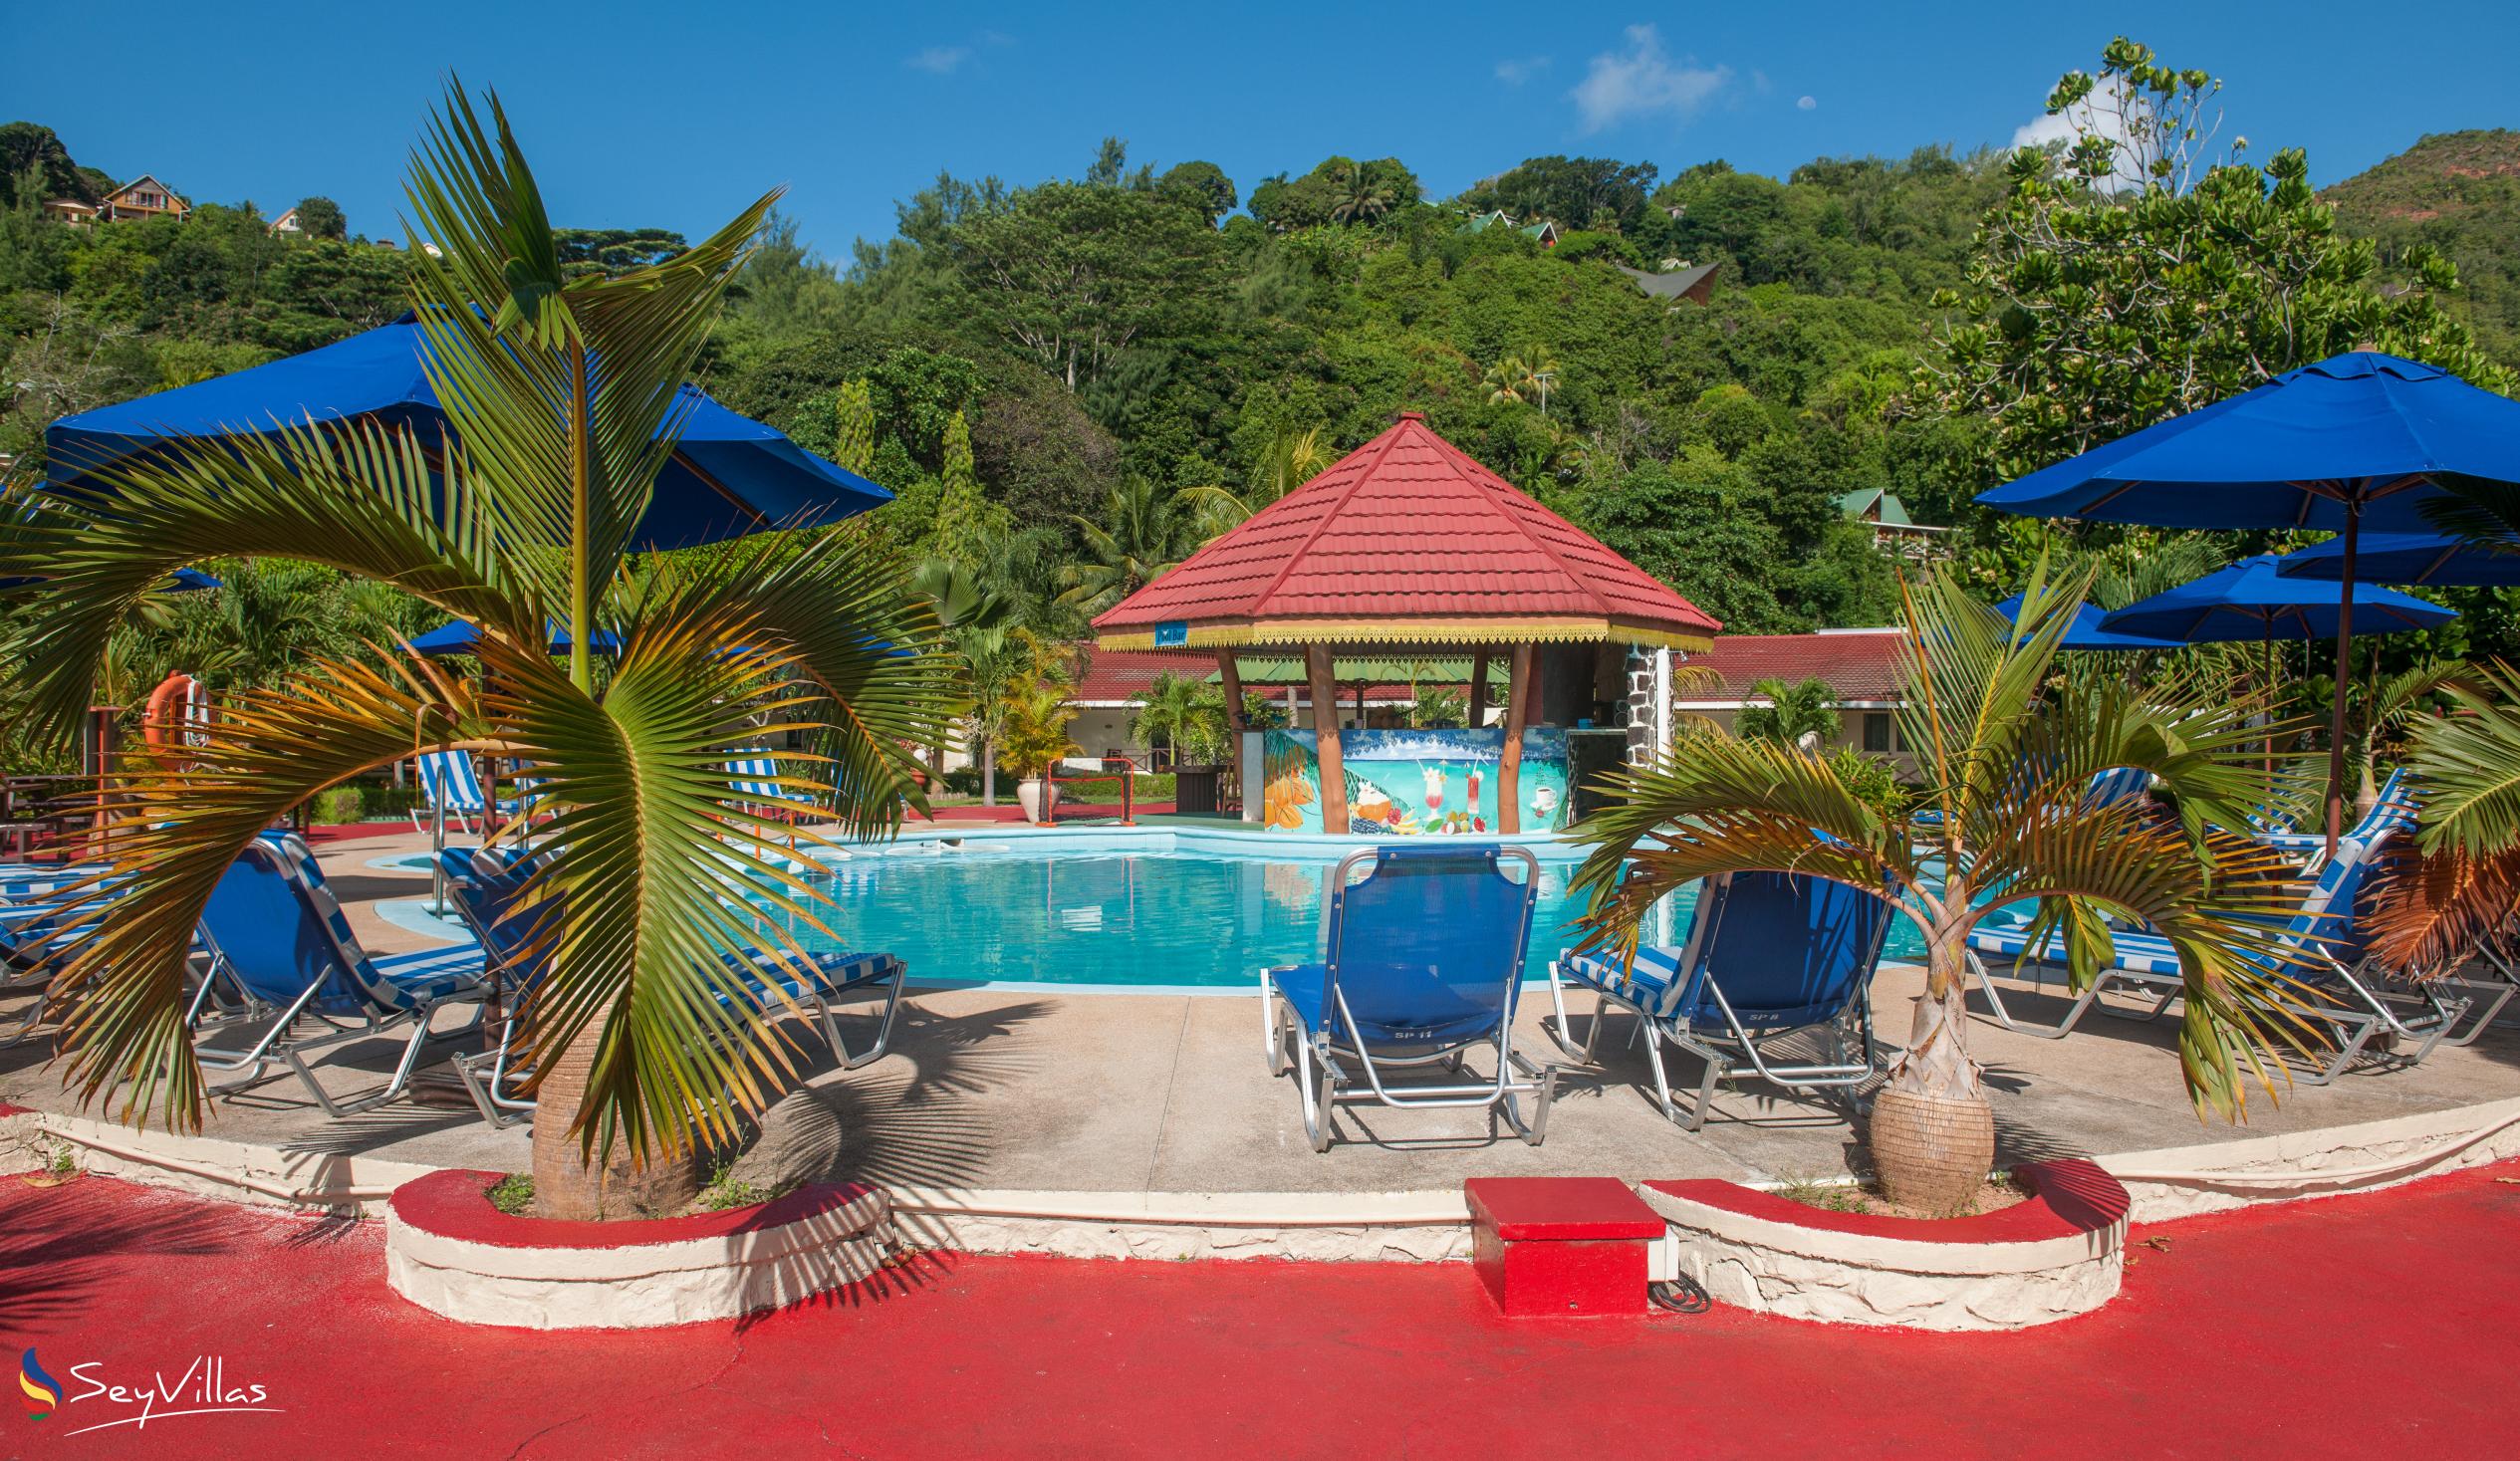 Photo 6: Berjaya Praslin Resort - Outdoor area - Praslin (Seychelles)